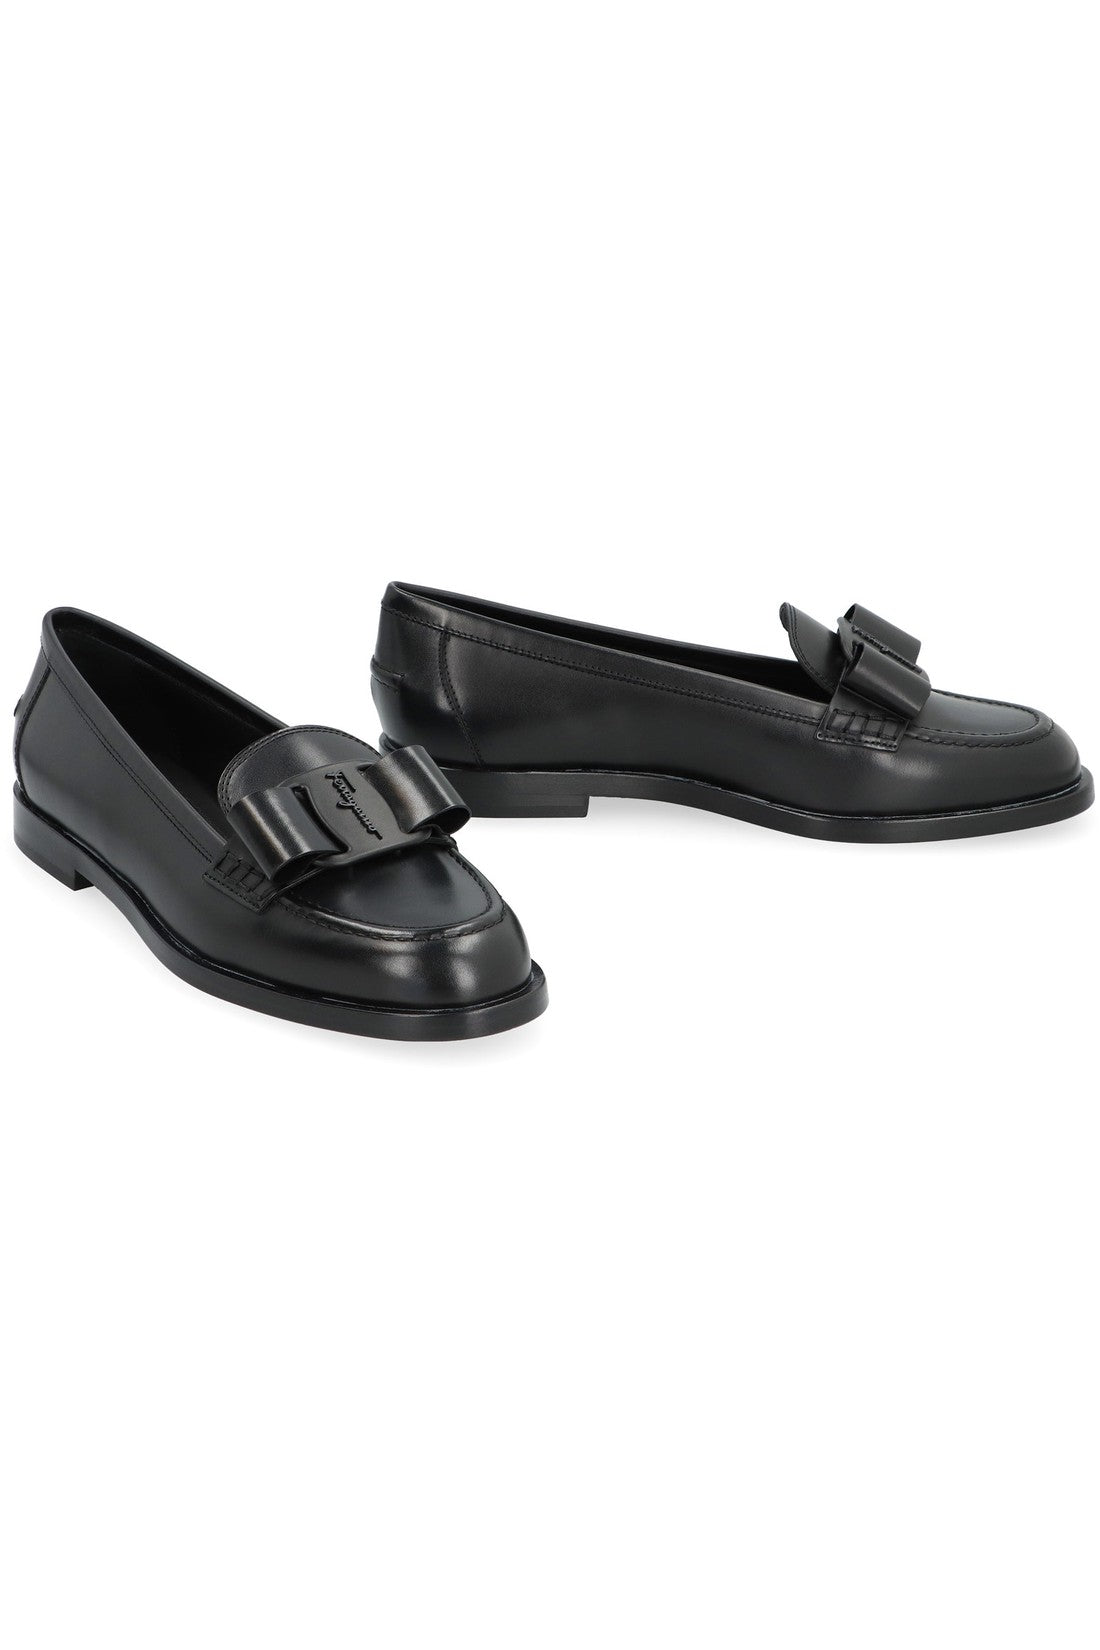 FERRAGAMO-OUTLET-SALE-Vivaldo leather loafers-ARCHIVIST